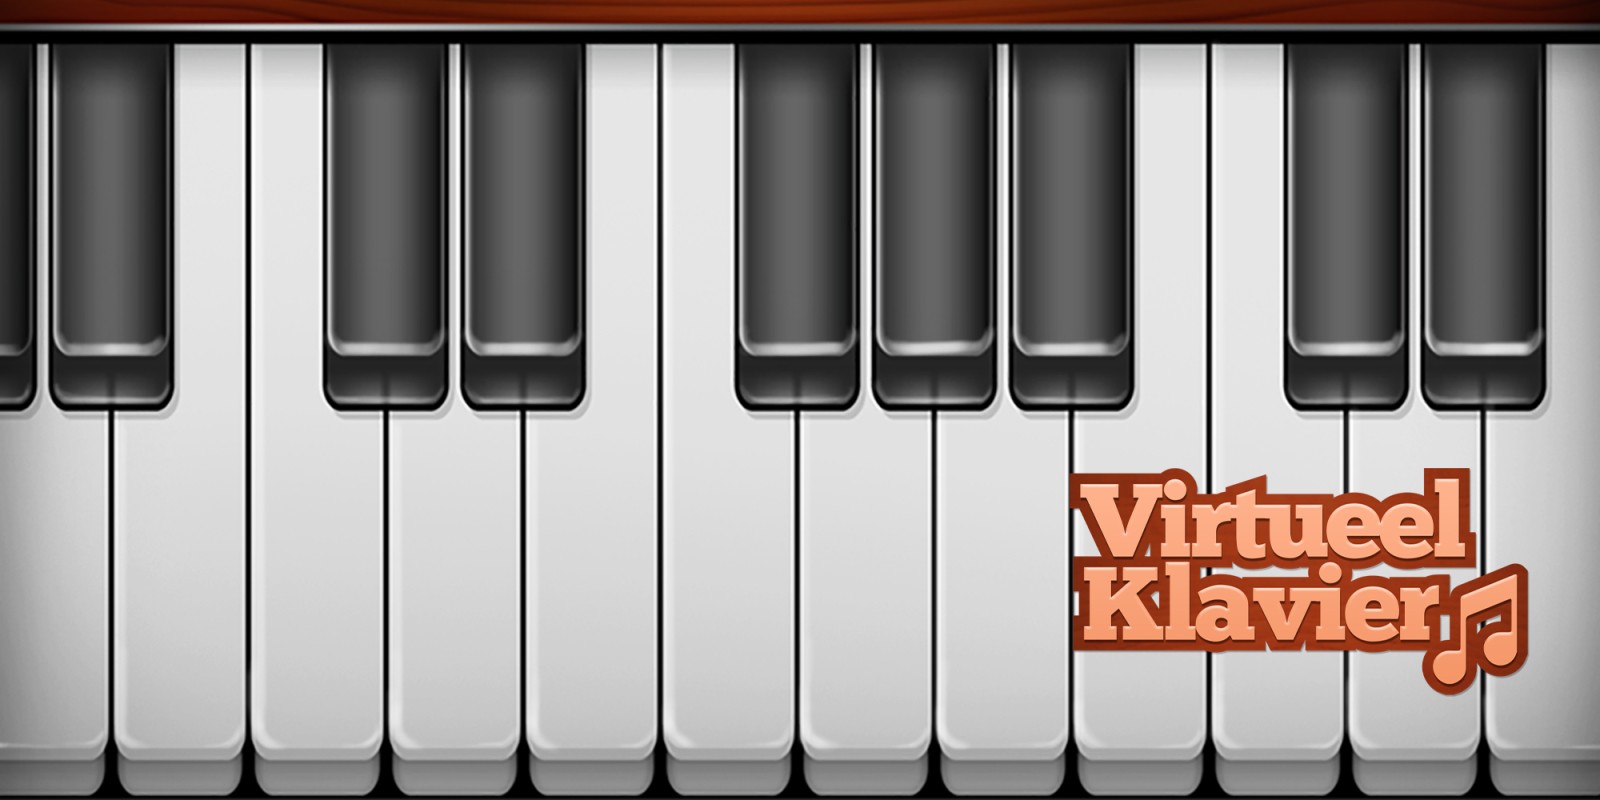 Virtueel Klavier